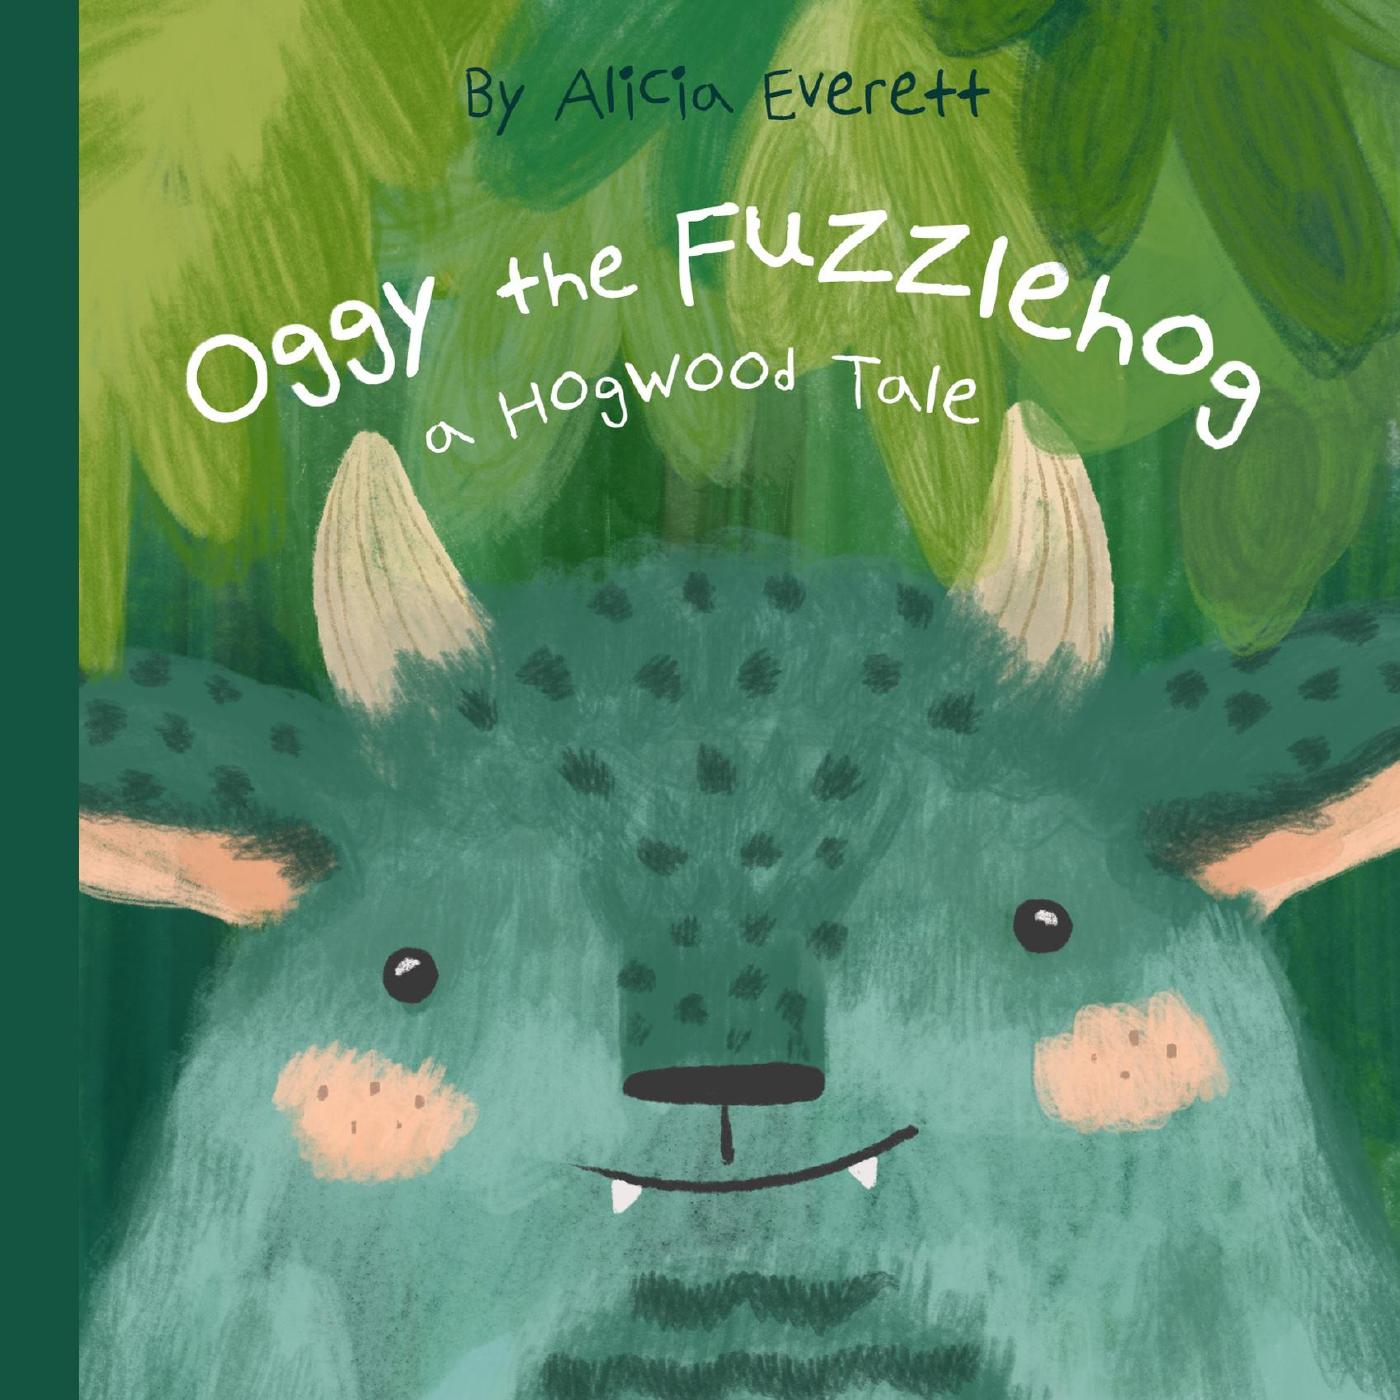 Oggy the Fuzzlehog | PDF to Flipbook